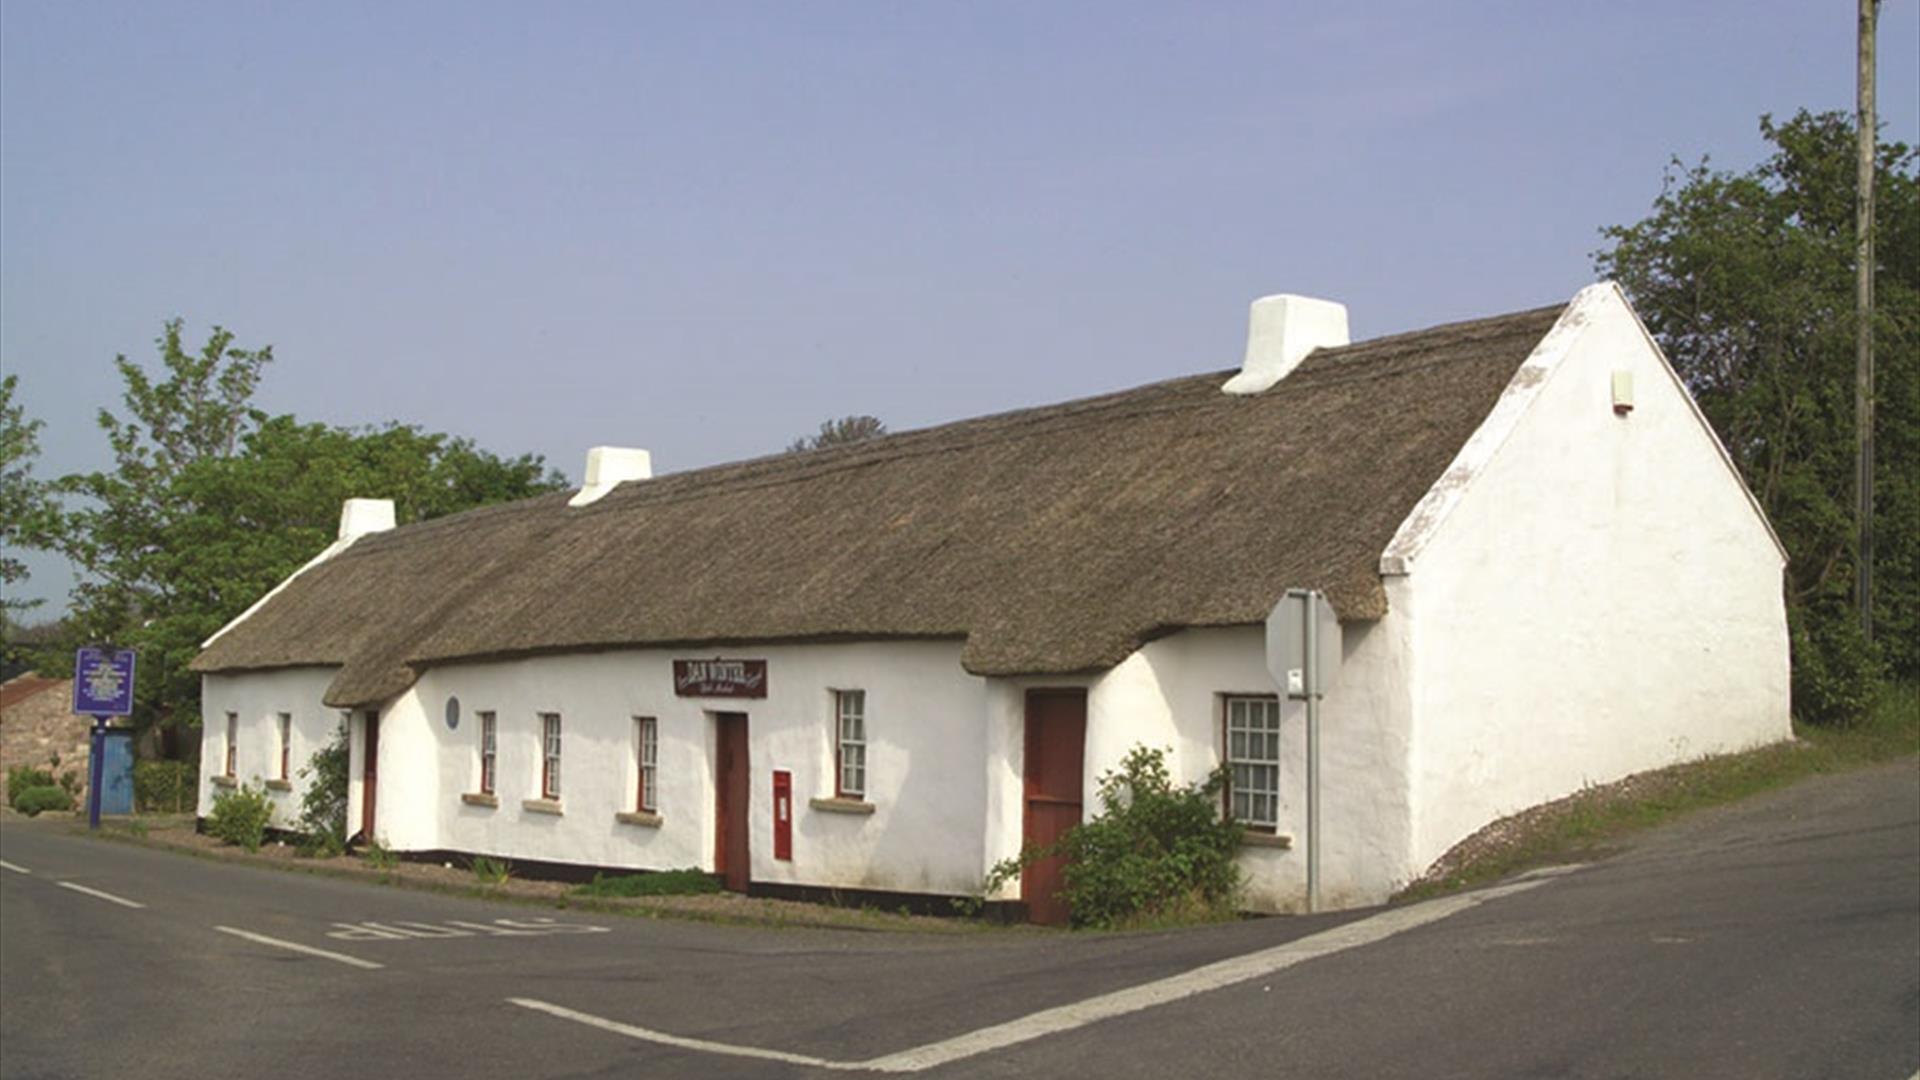 Dan Winter's Cottage